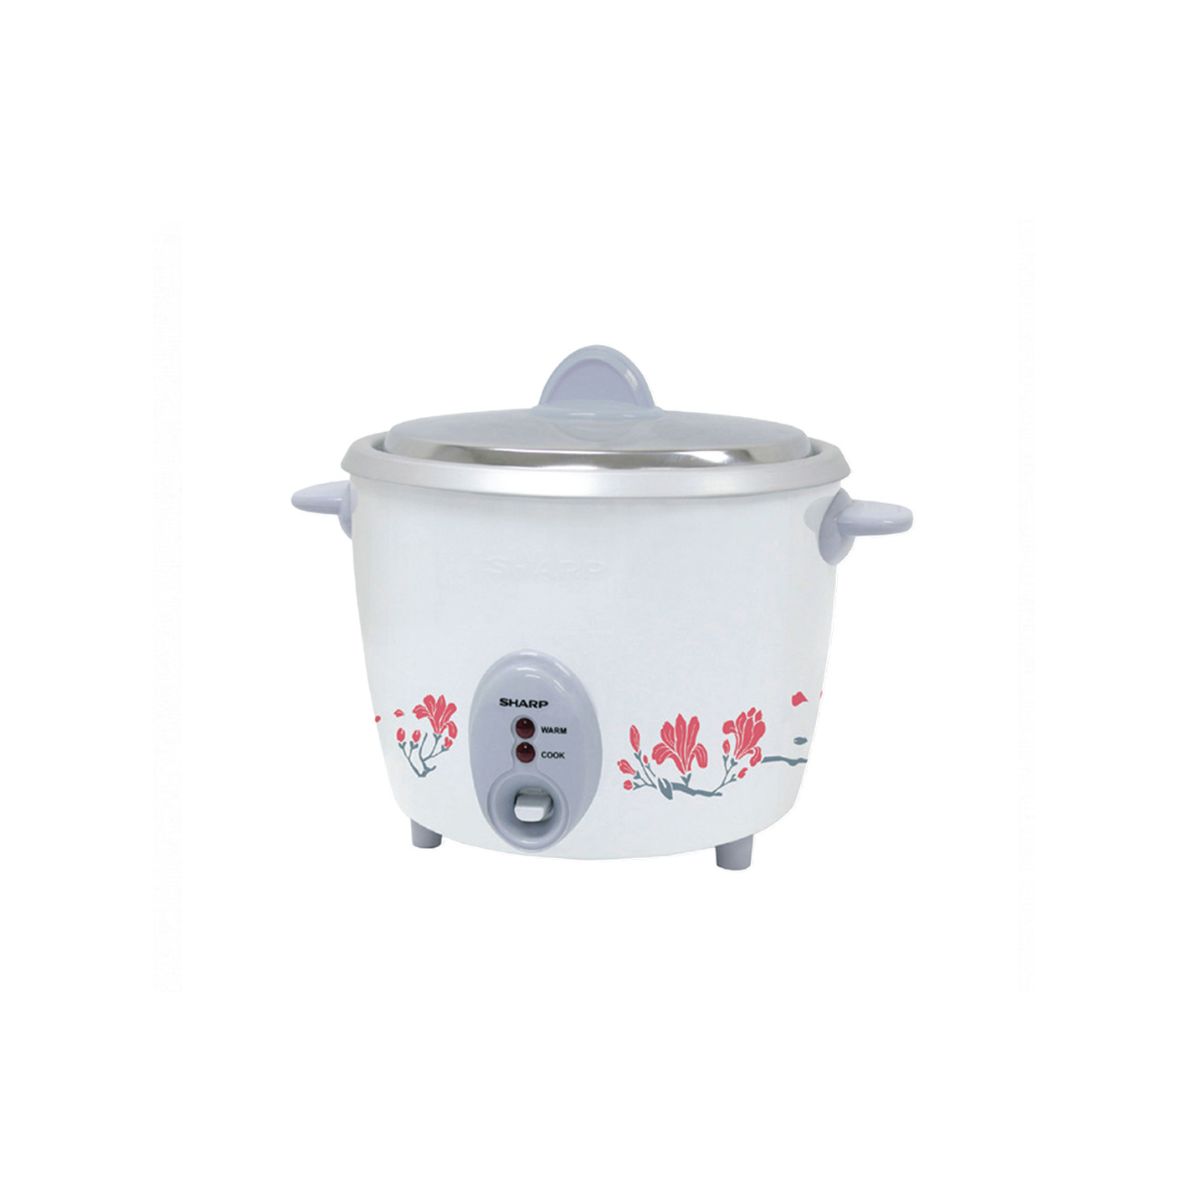 Sharp Electric Rice Cooker - KSH - D22 - 2.2L